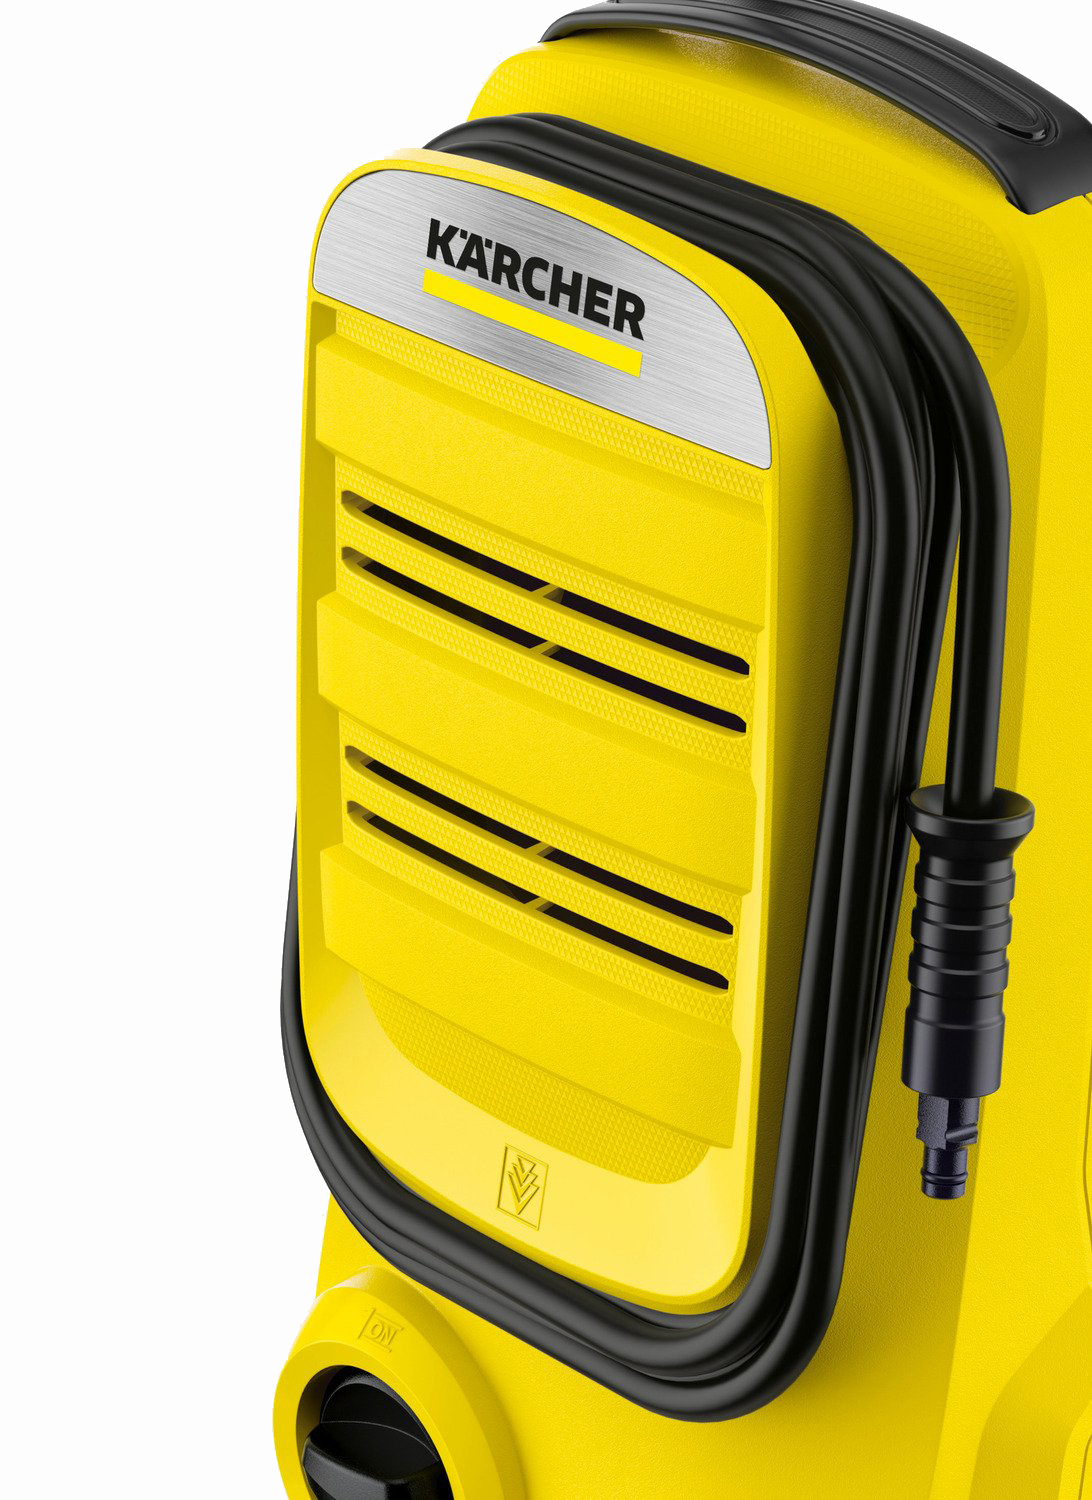 KARCHER K2 COMPACT HIGH PRESSURE CLEANER 110BAR